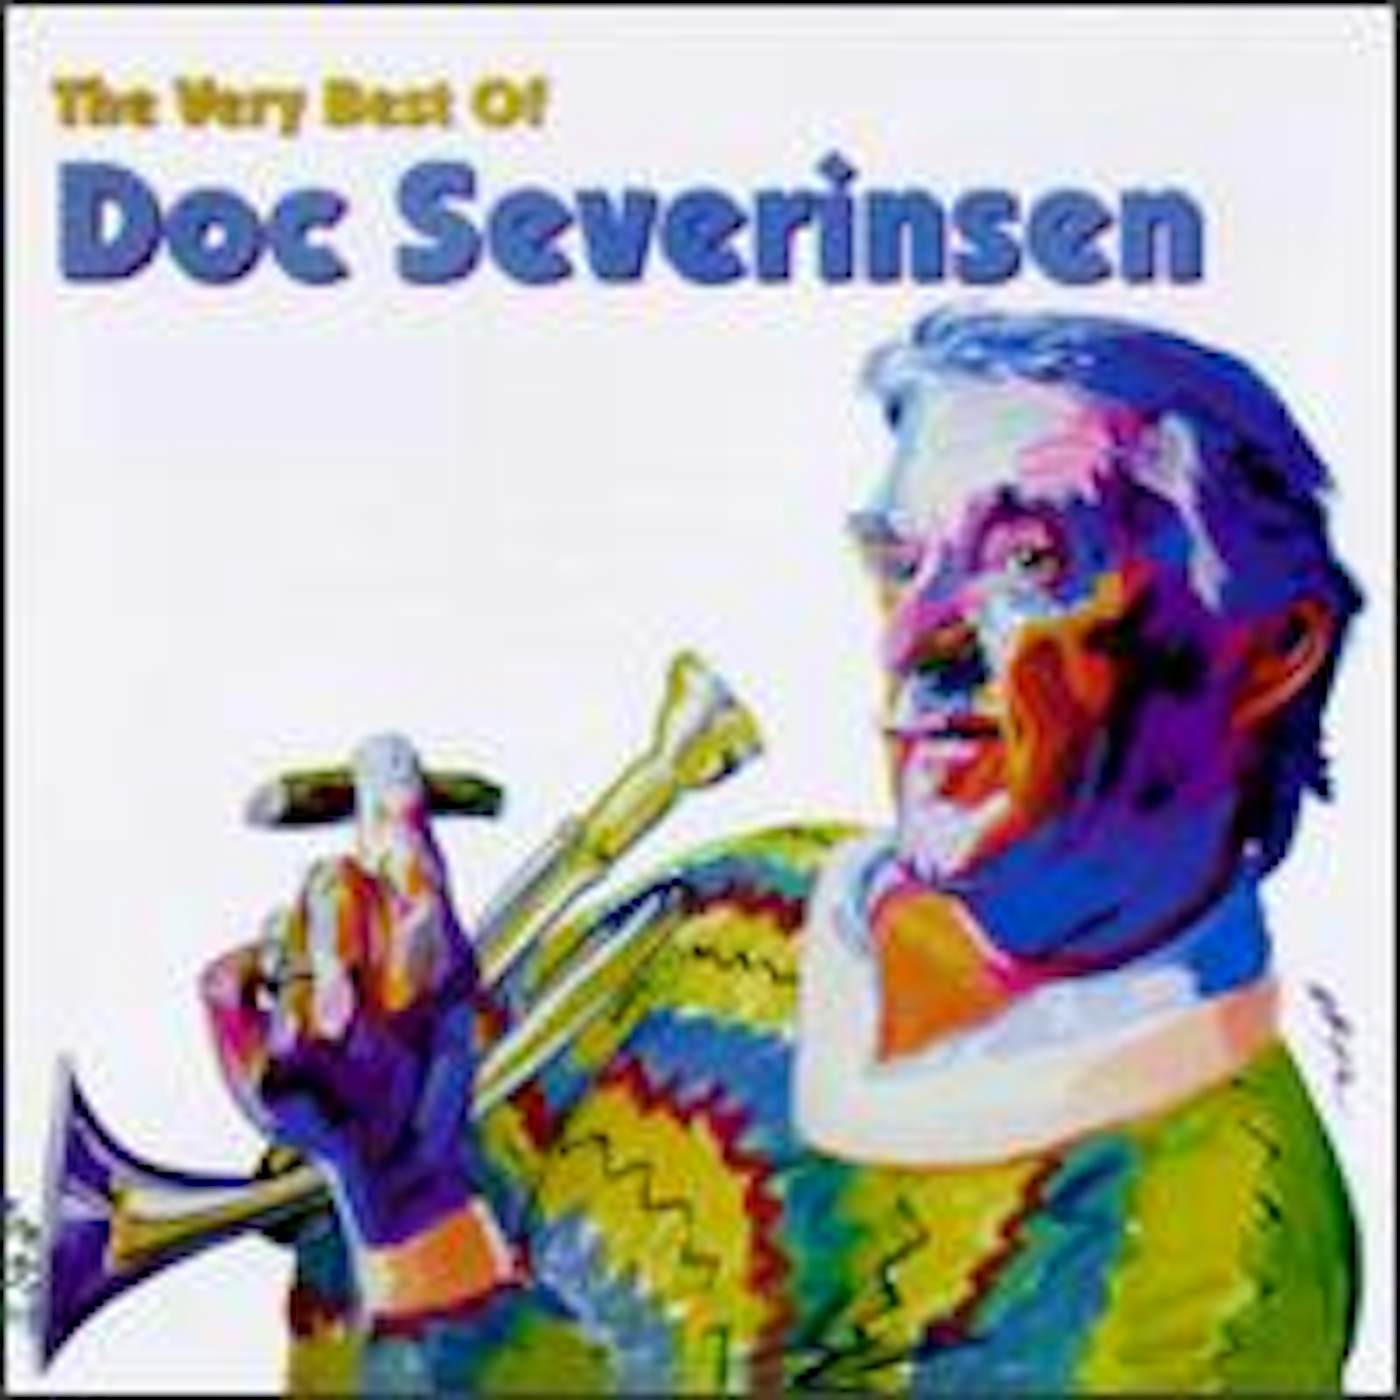 Doc Severinsen VERY BEST OF CD